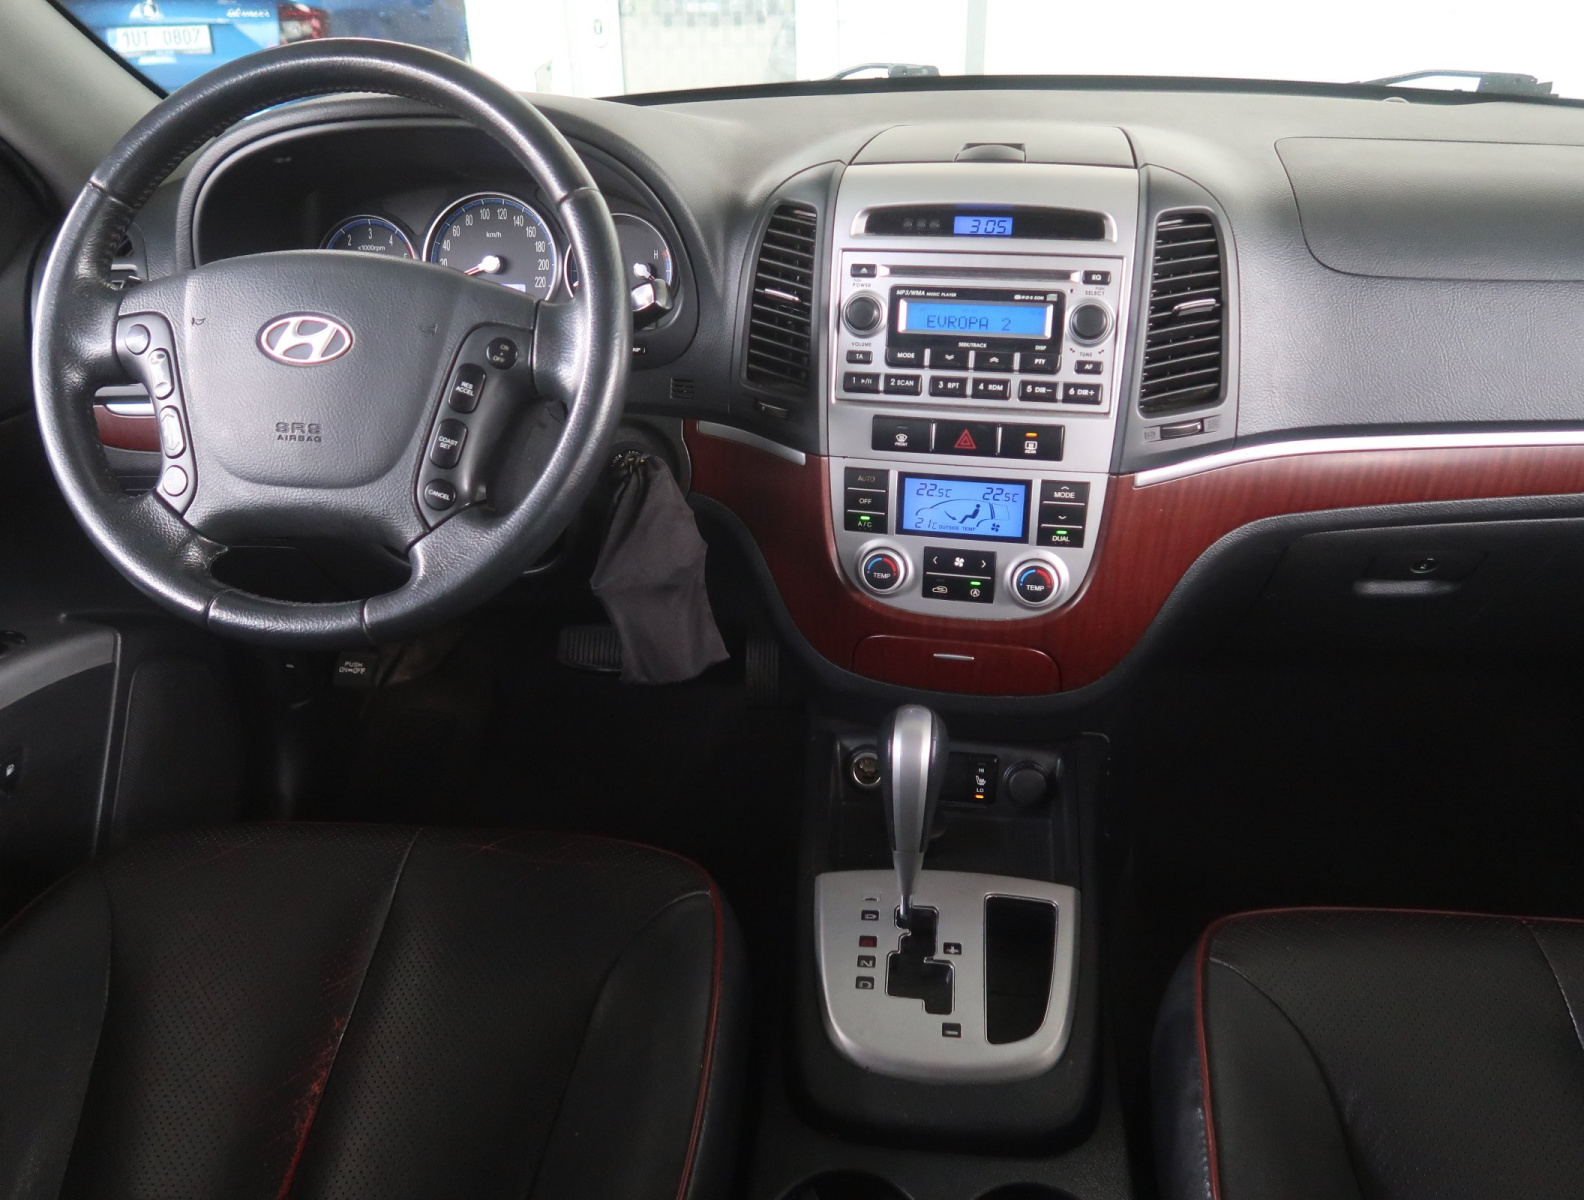 Hyundai Santa Fe, 2009, 2.2 CRDi, 114kW, 4x4